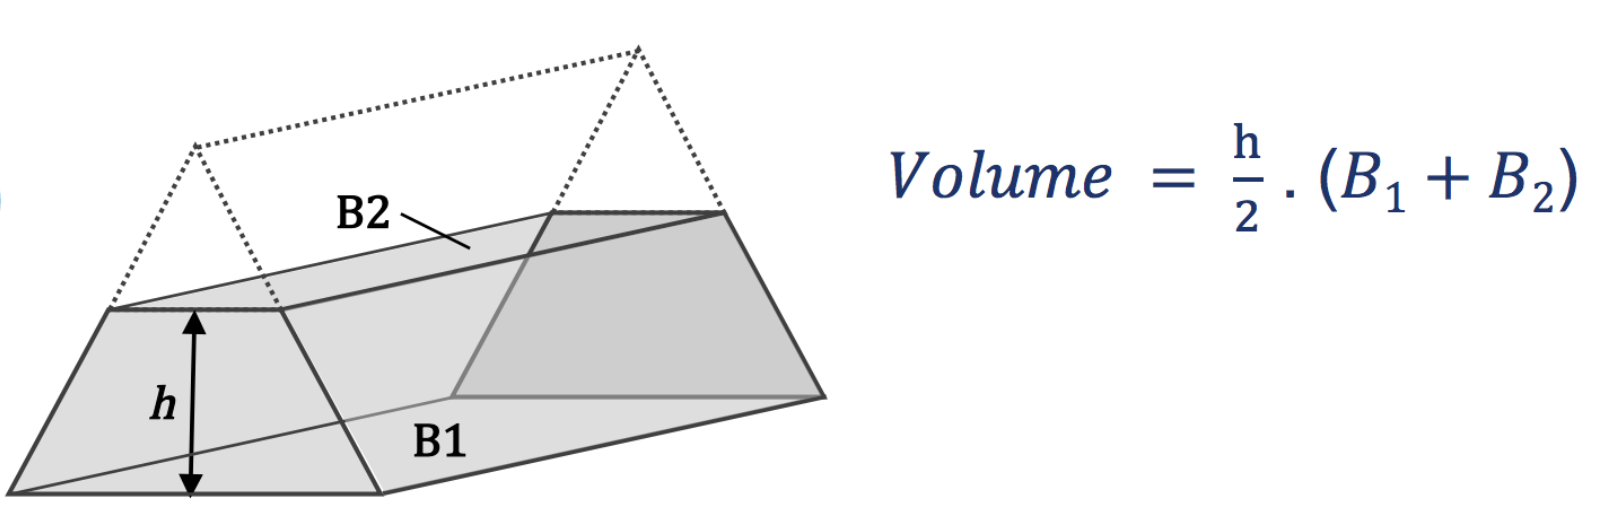 Volume Formula For A Trapezoidal Prism